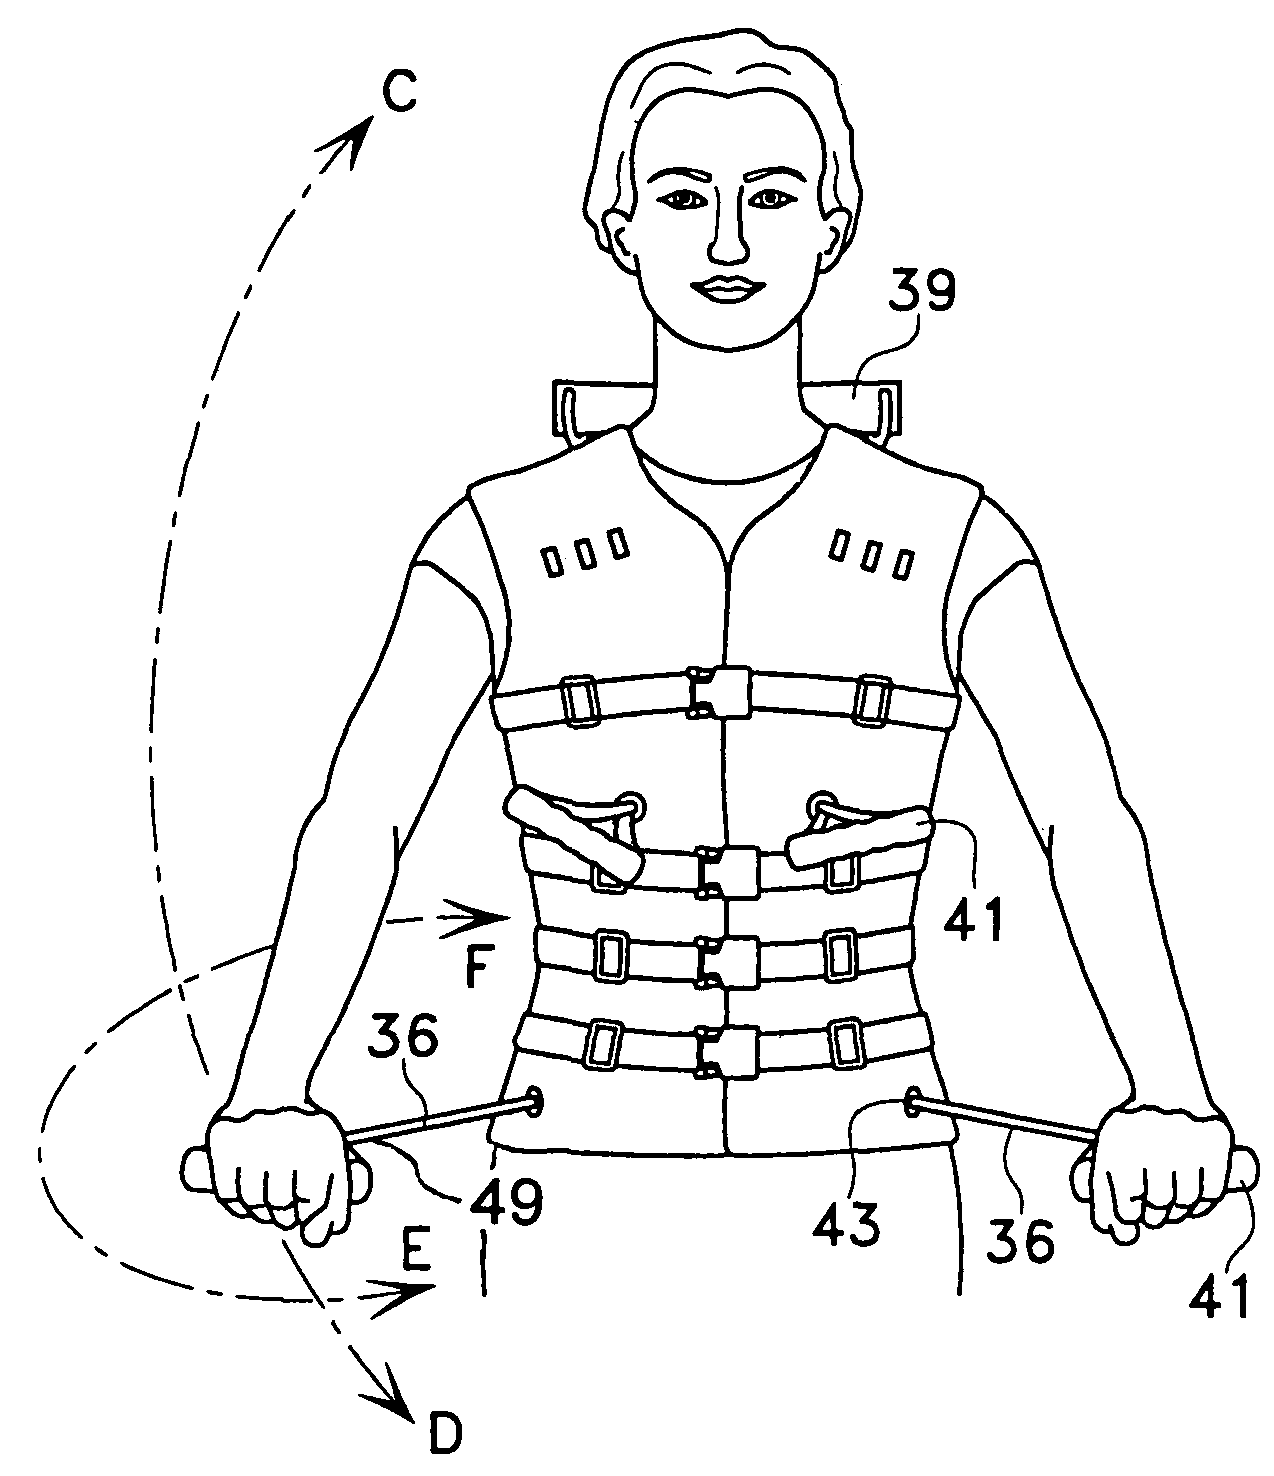 Exercise vest